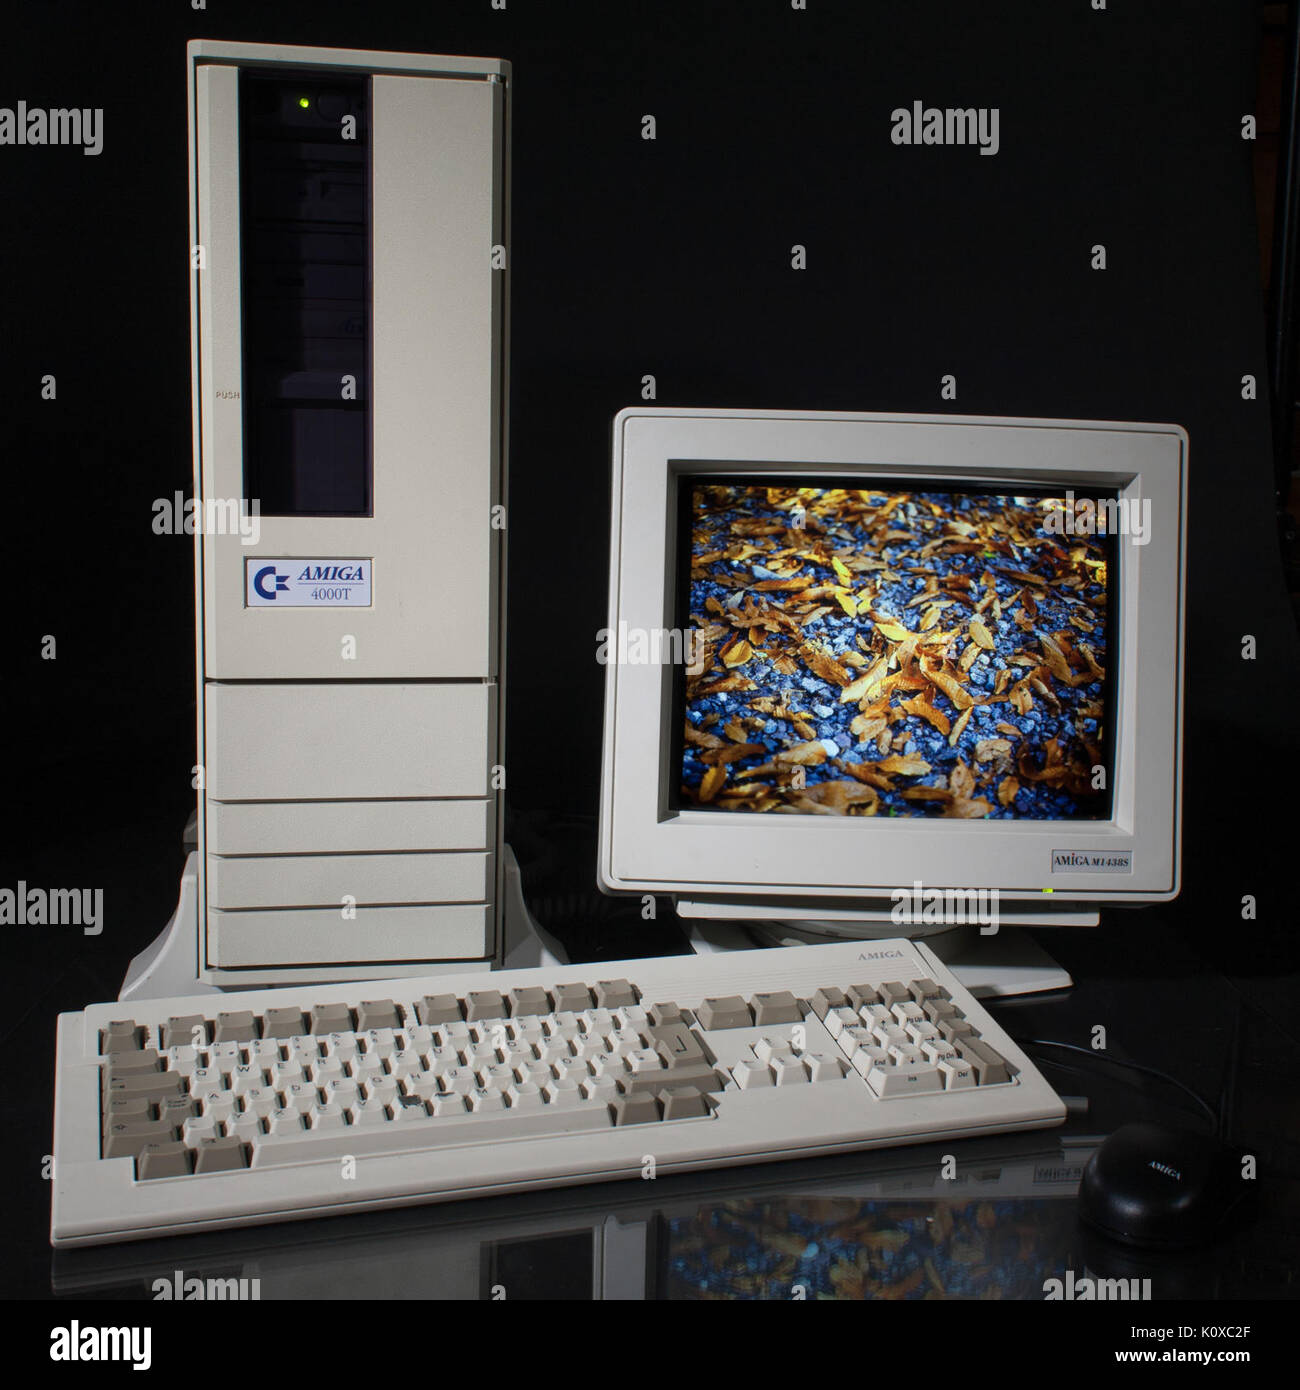 Amiga 4000T Stock Photo